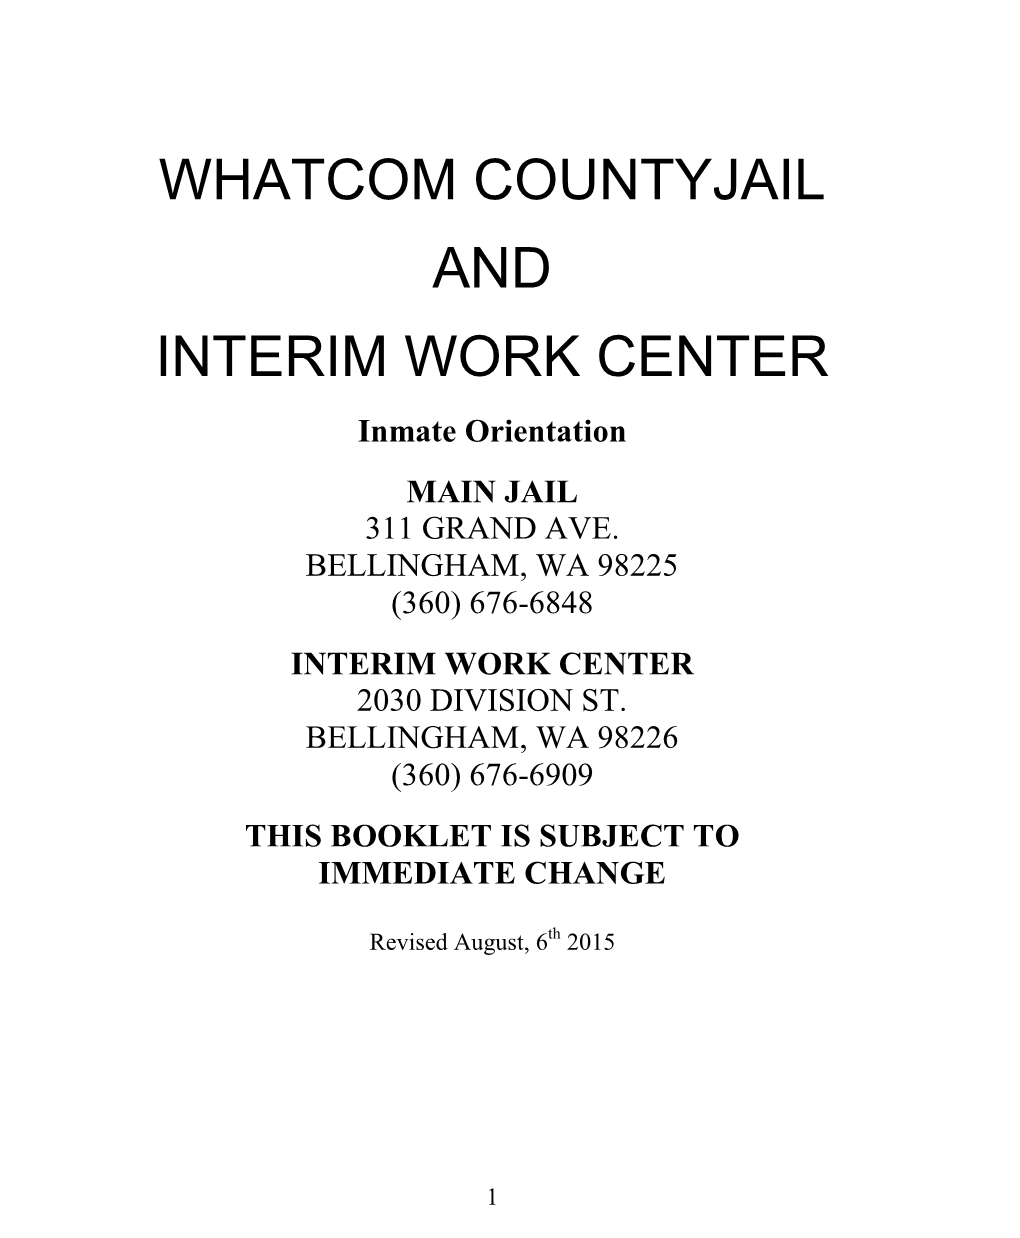 Whatcom Countyjail and Interim Work Center